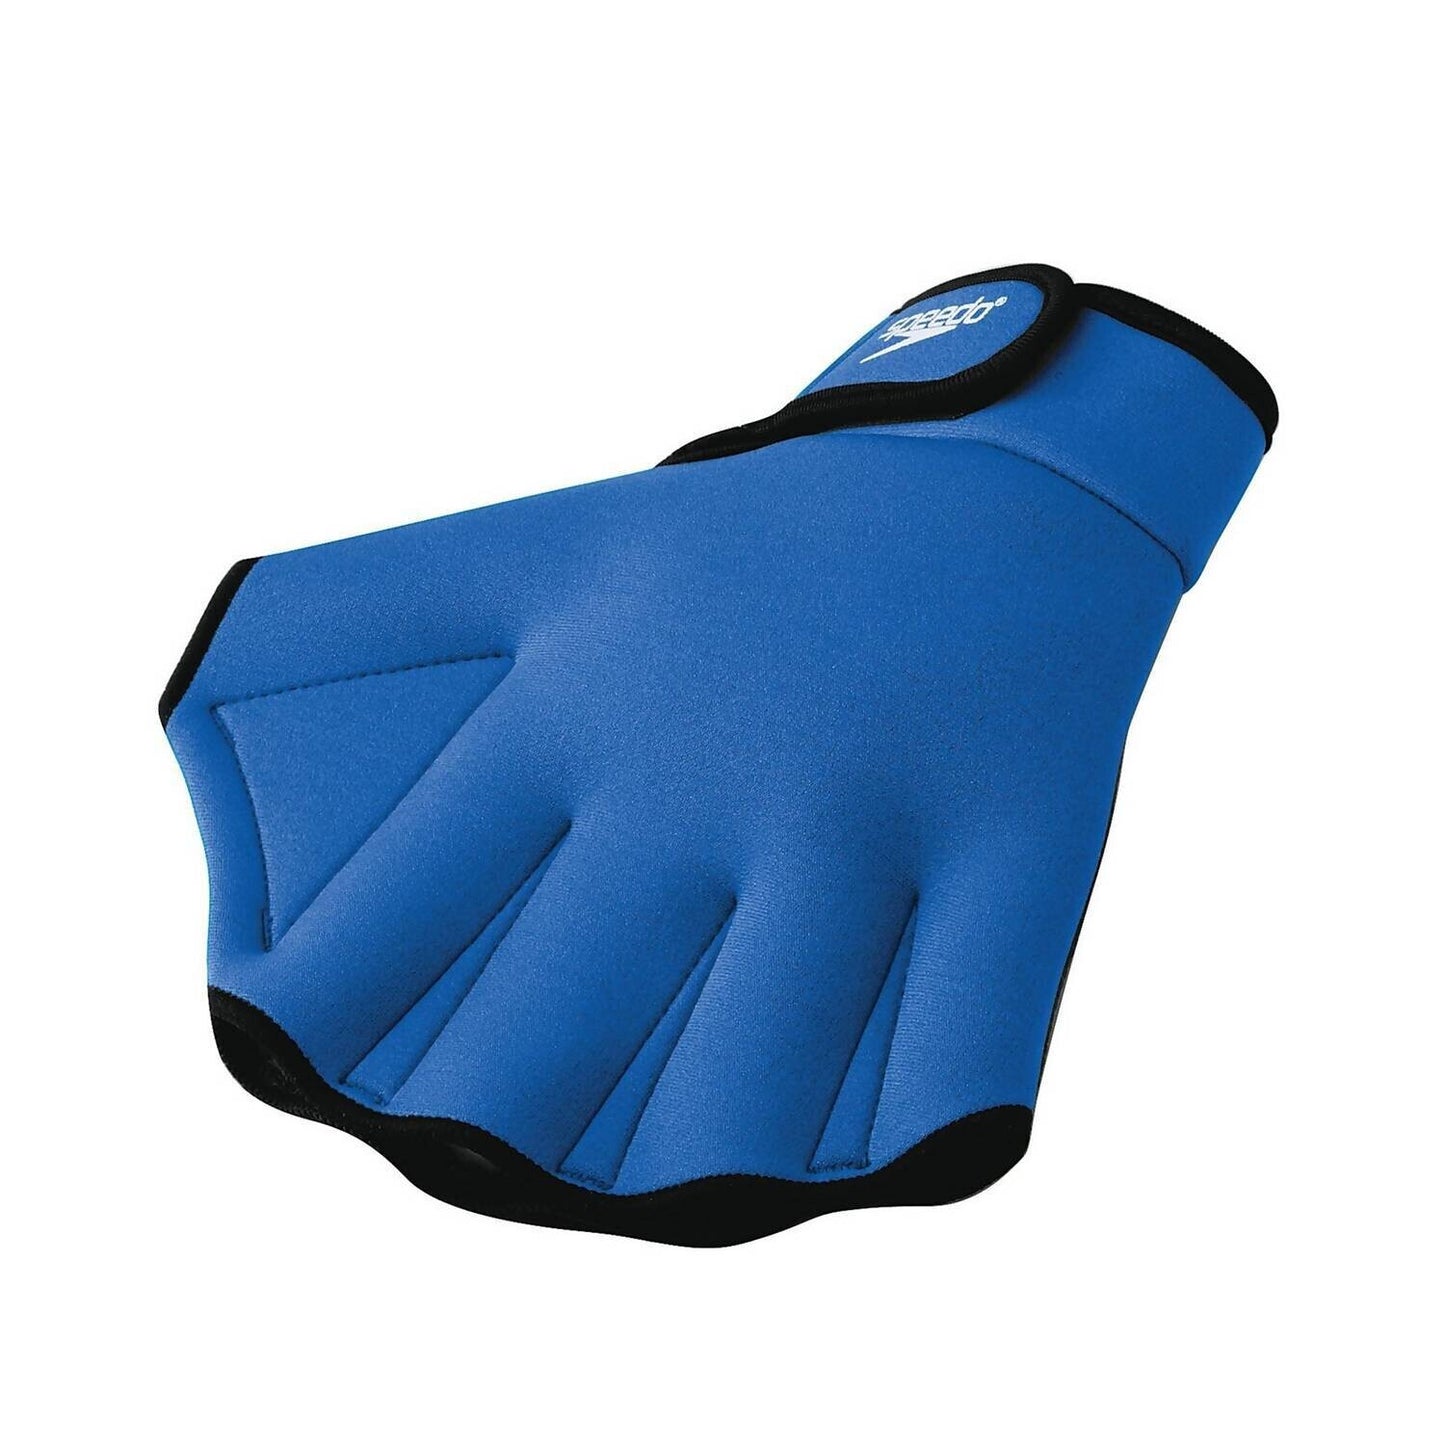 Speedo S Royal Blue Aquatic Fitness Gloves